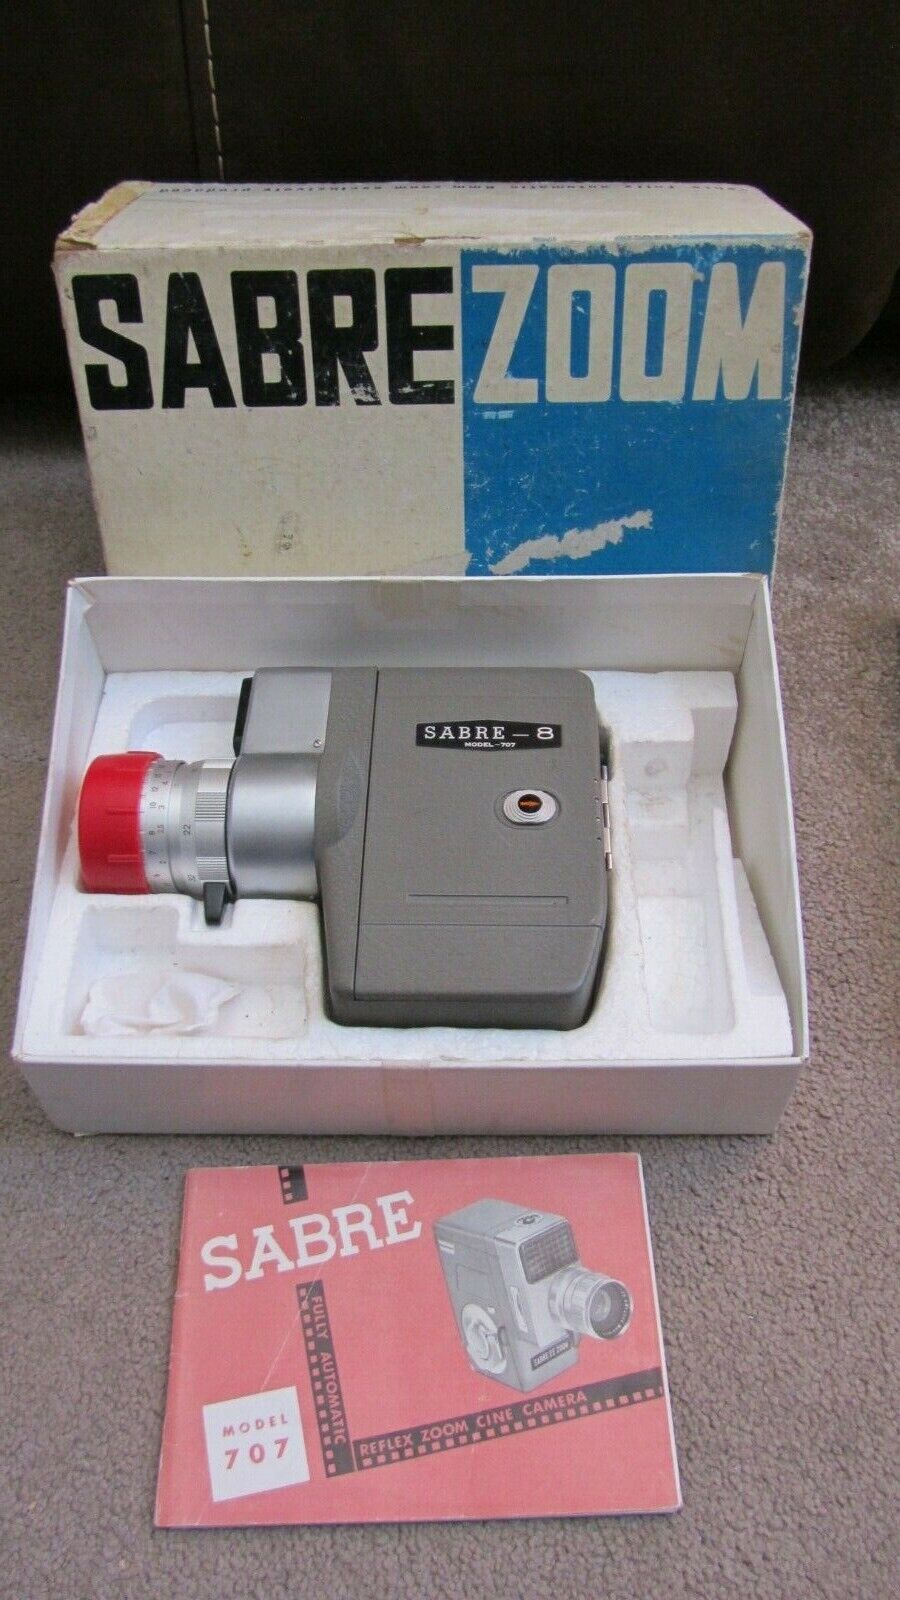 Boxed Sabre Zoom Model 707 Reflex Cine Camera and Manual